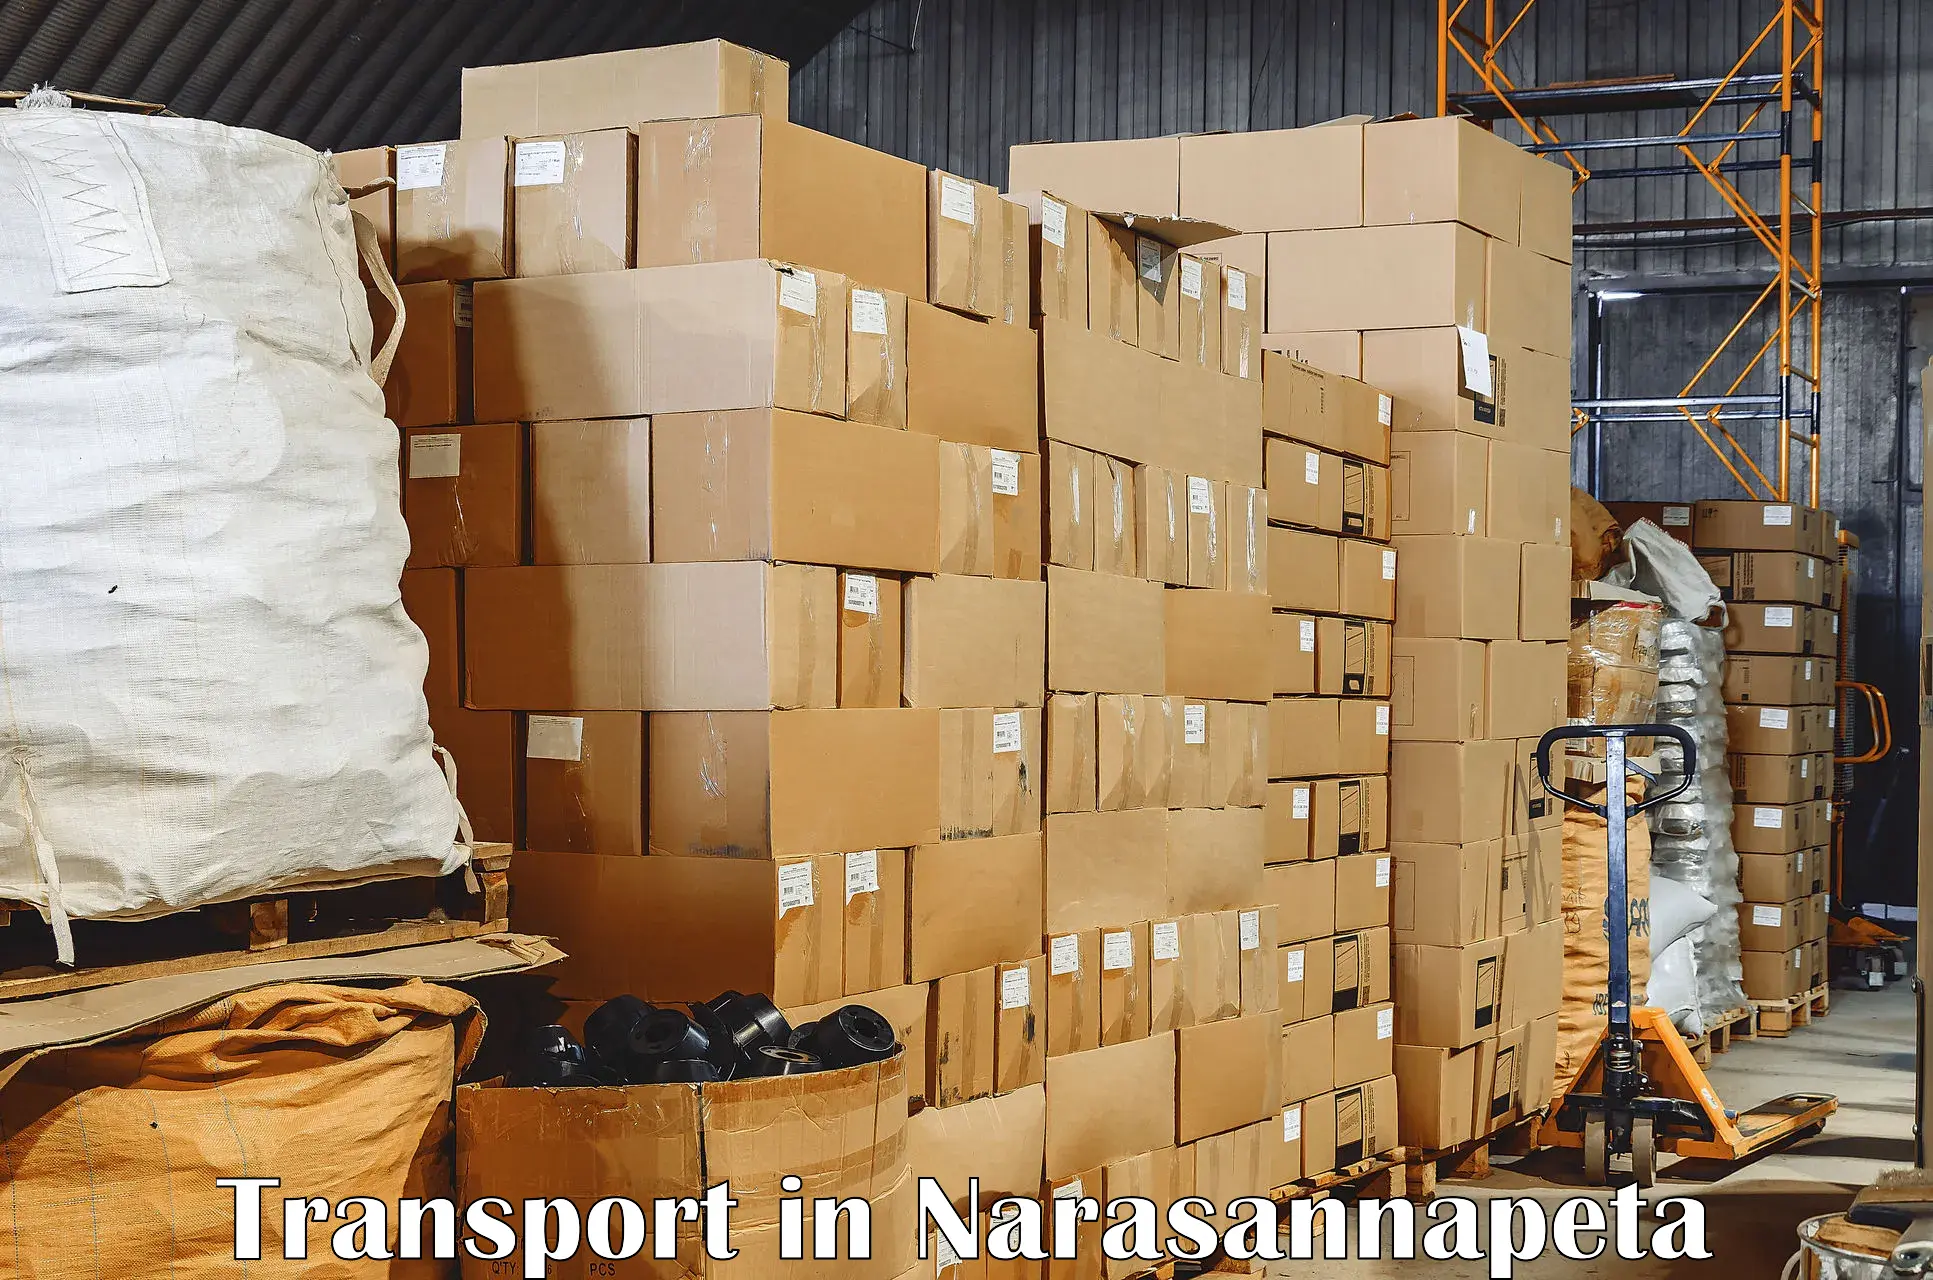 Interstate goods transport in Narasannapeta